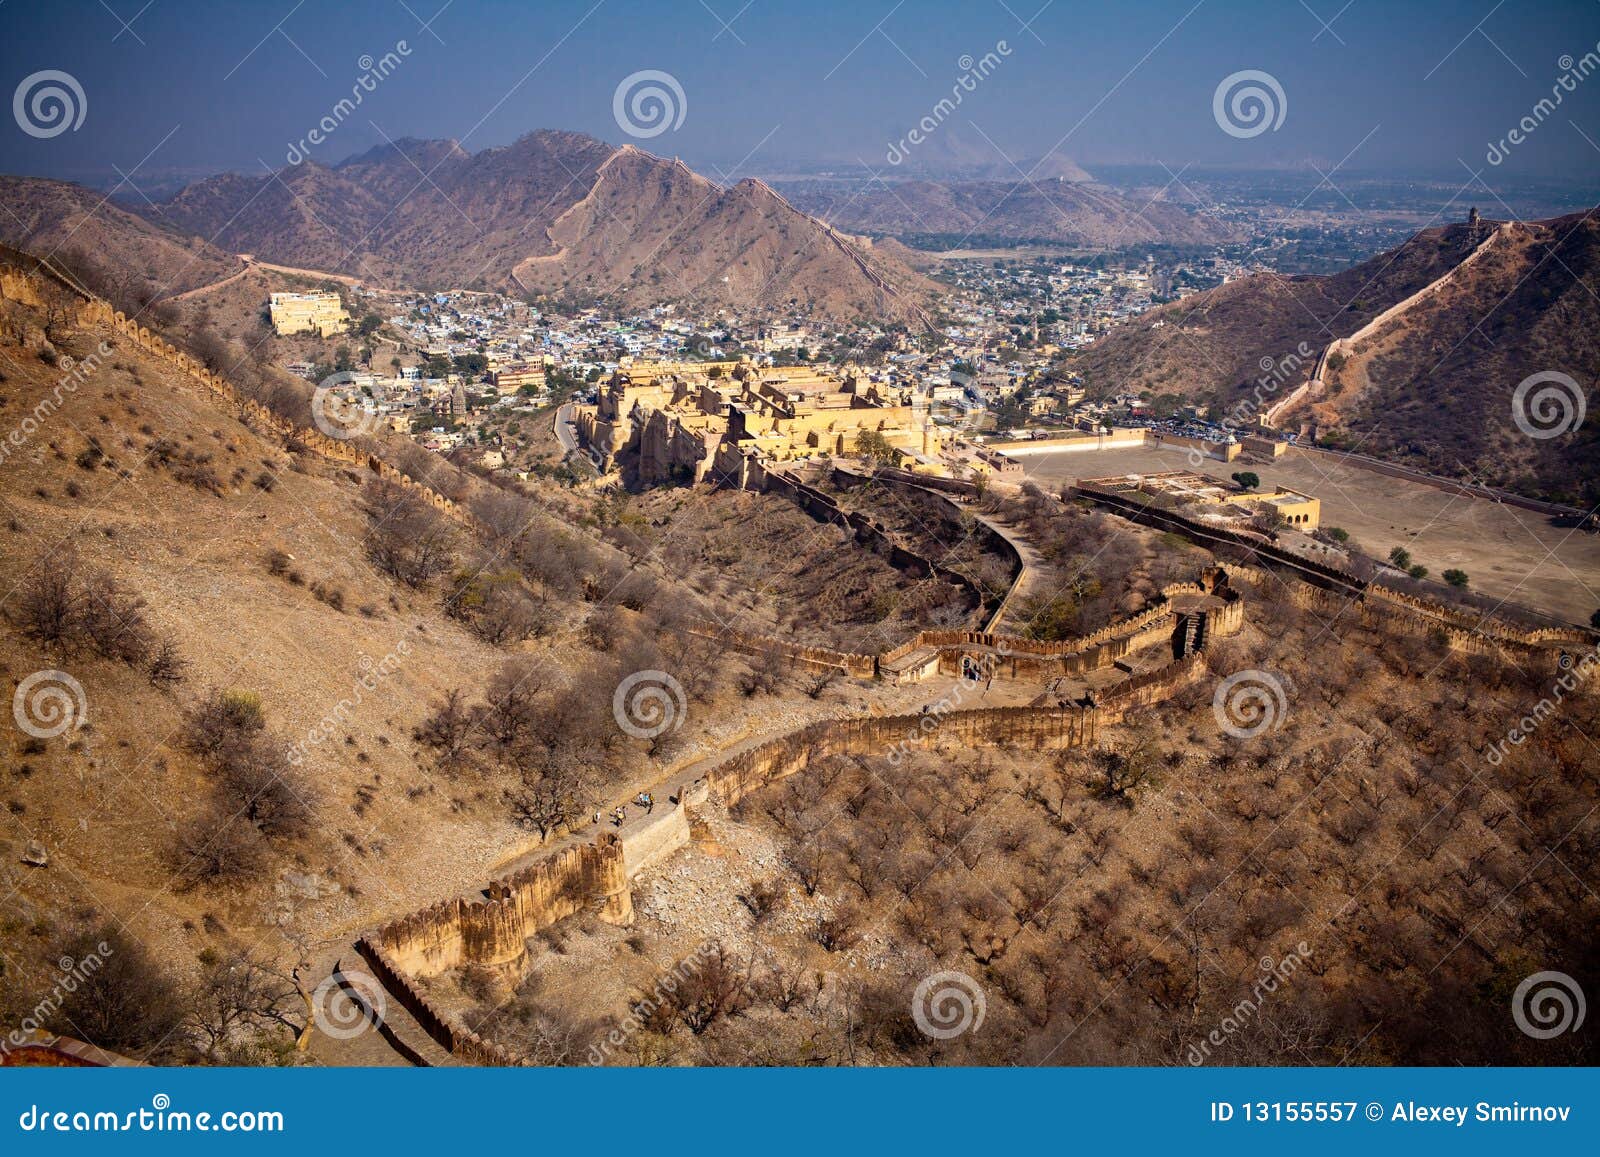 Jaipur Hills stock image. Image of asia, hills, india - 13155557